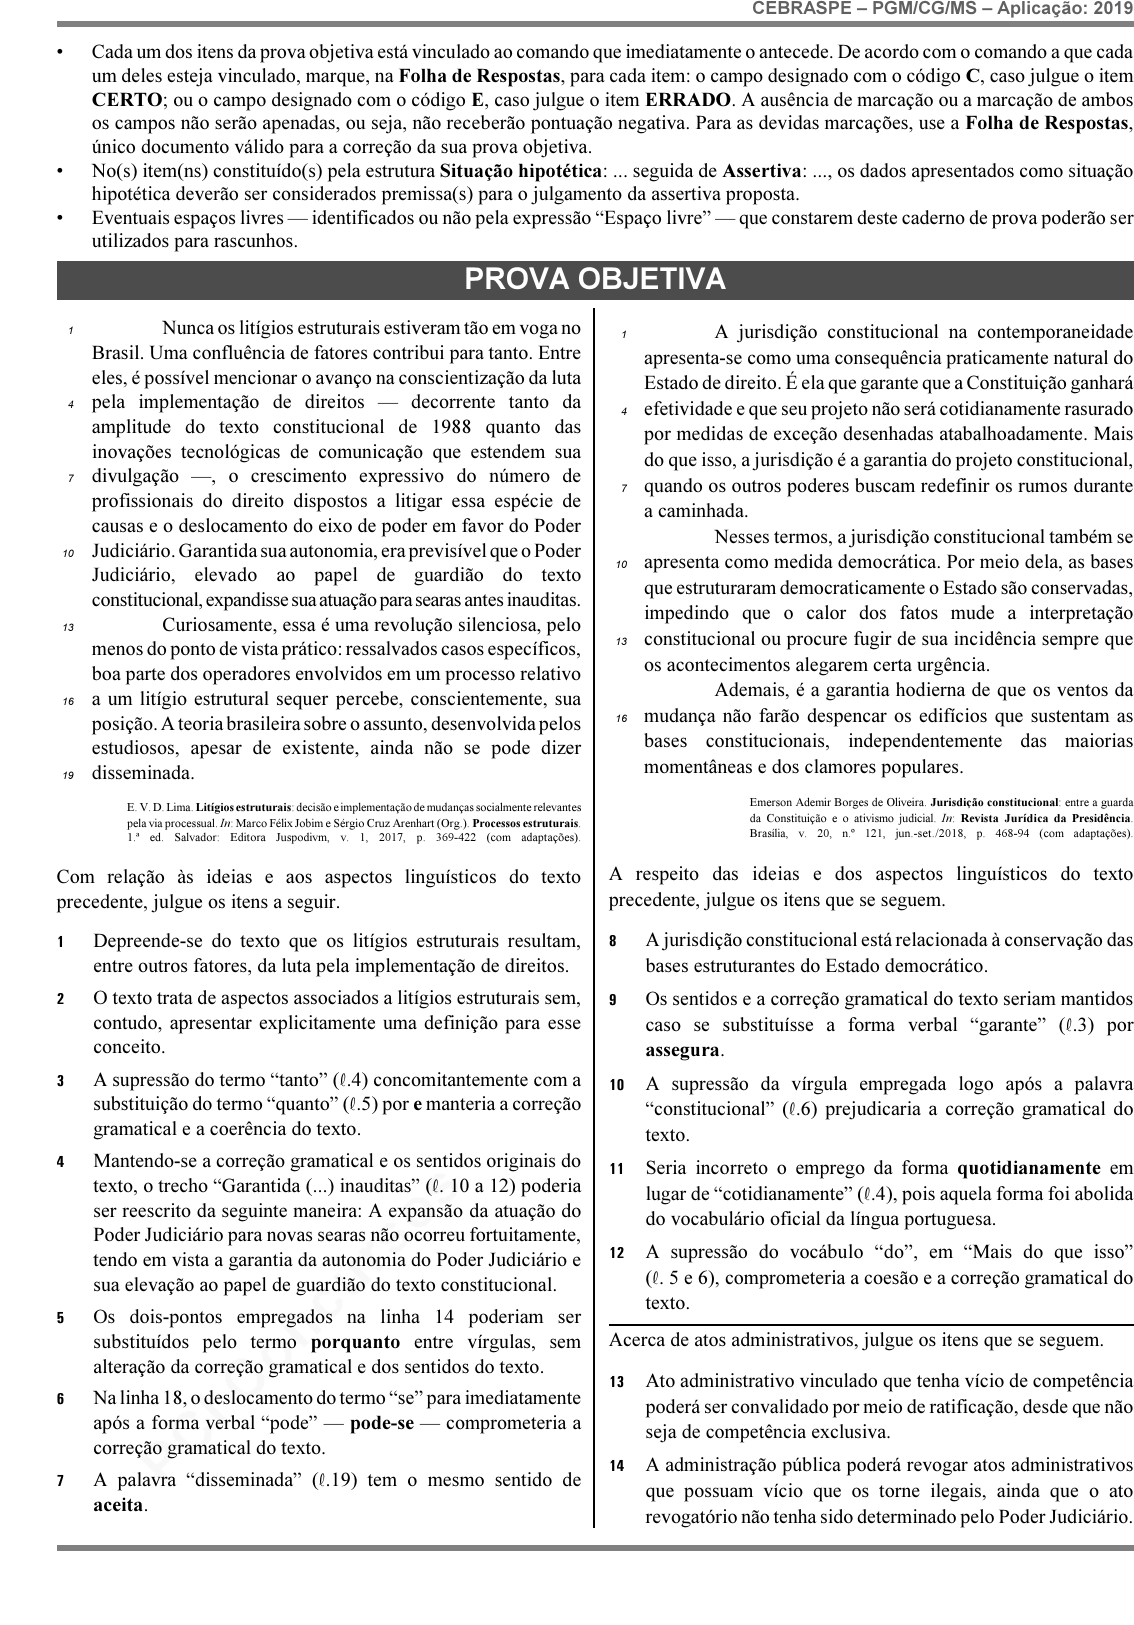 FGV 2022 Mpe SC Auxiliar Do Ministerio Publico Prova, PDF, Promotor